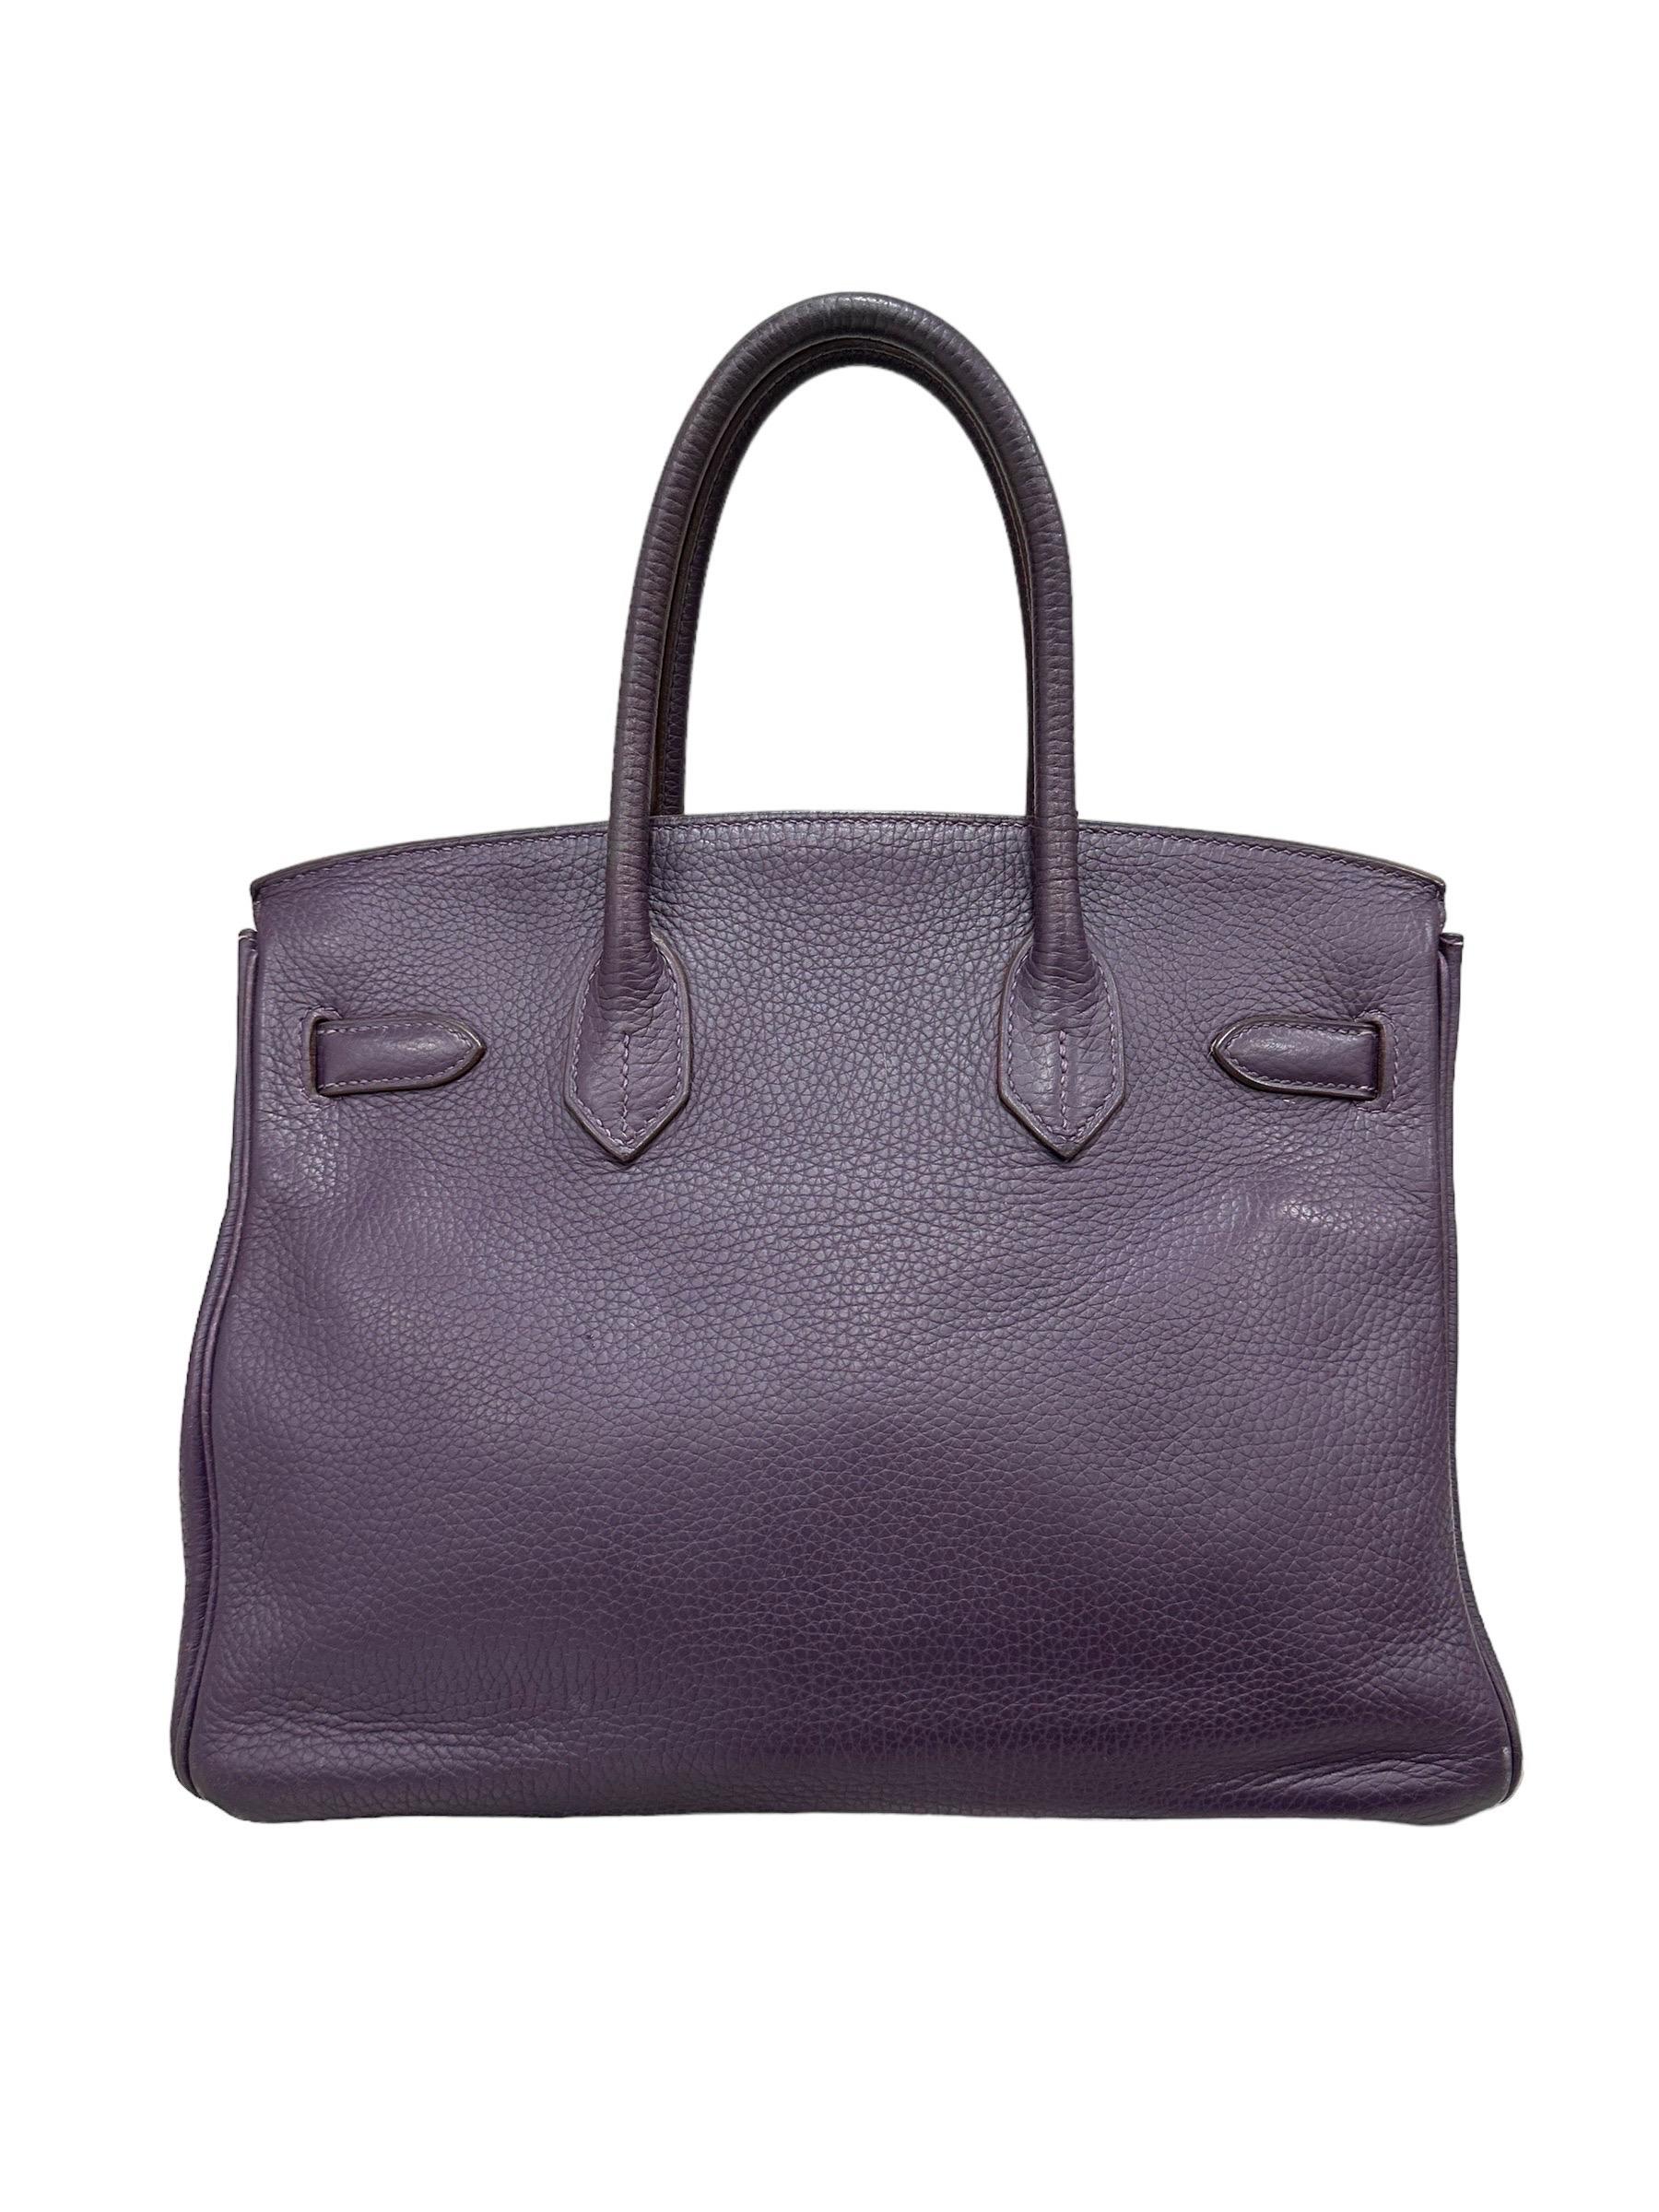 2007 Hermès Birkin 30 Clemence Leather Violet Raisin Top Handle Bag For Sale 3